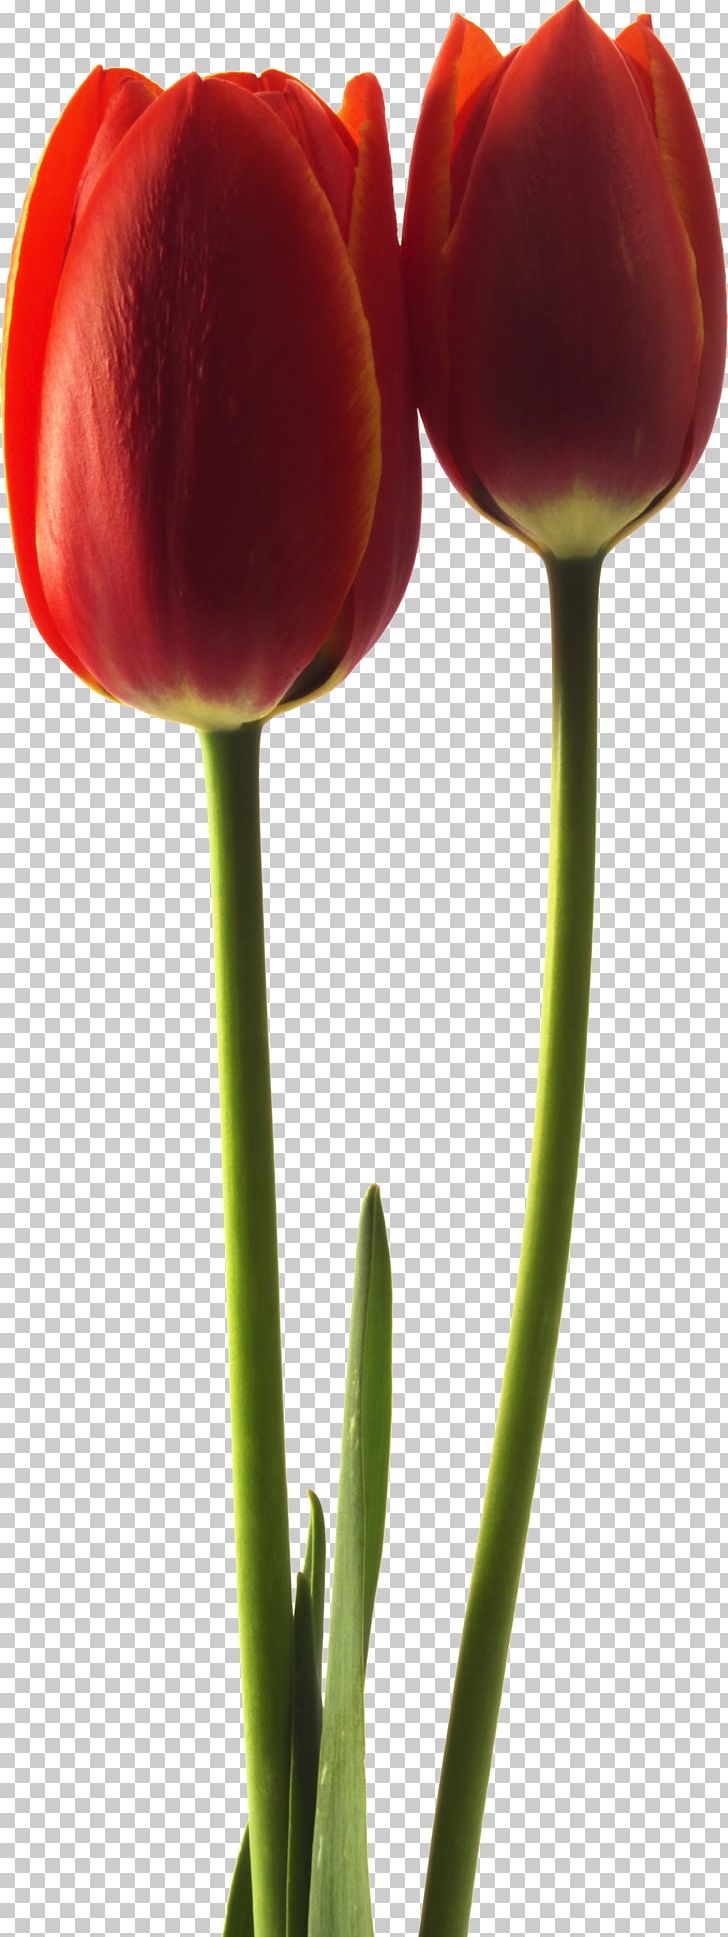 Tulip Plant Stem Puthandu Bud Petal PNG, Clipart, Bud, Closeup, Flower, Flowering Plant, Flowers Free PNG Download